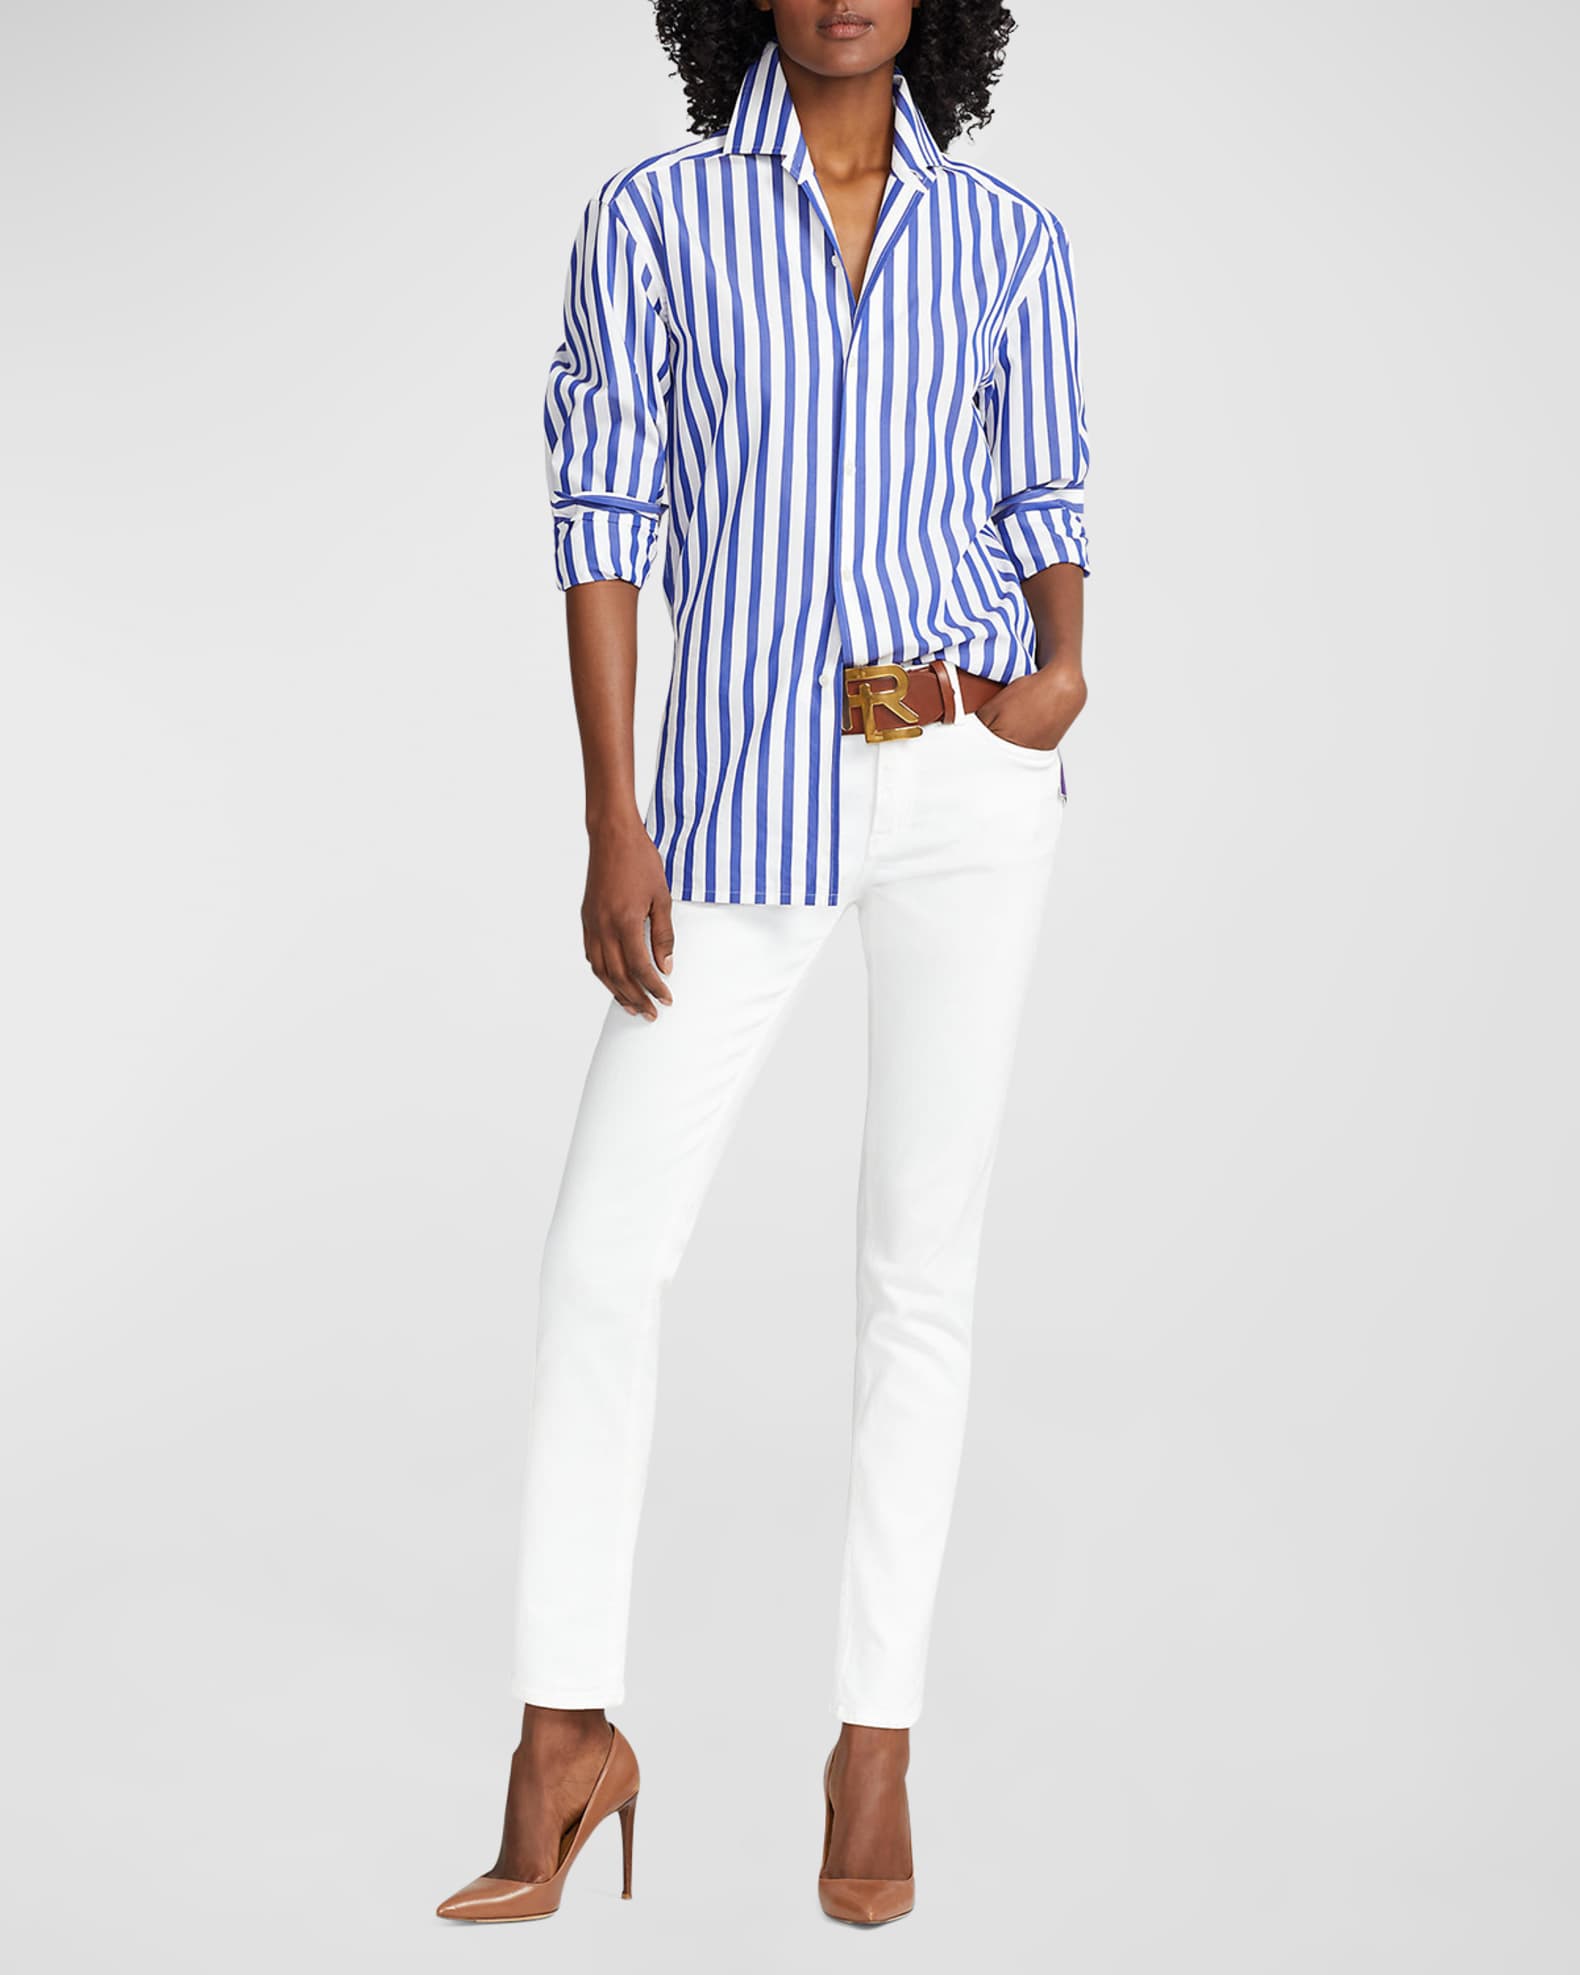 Ralph Lauren Collection Women's Capri Striped Button-Up Shirt - White Classic Blue - Size 12